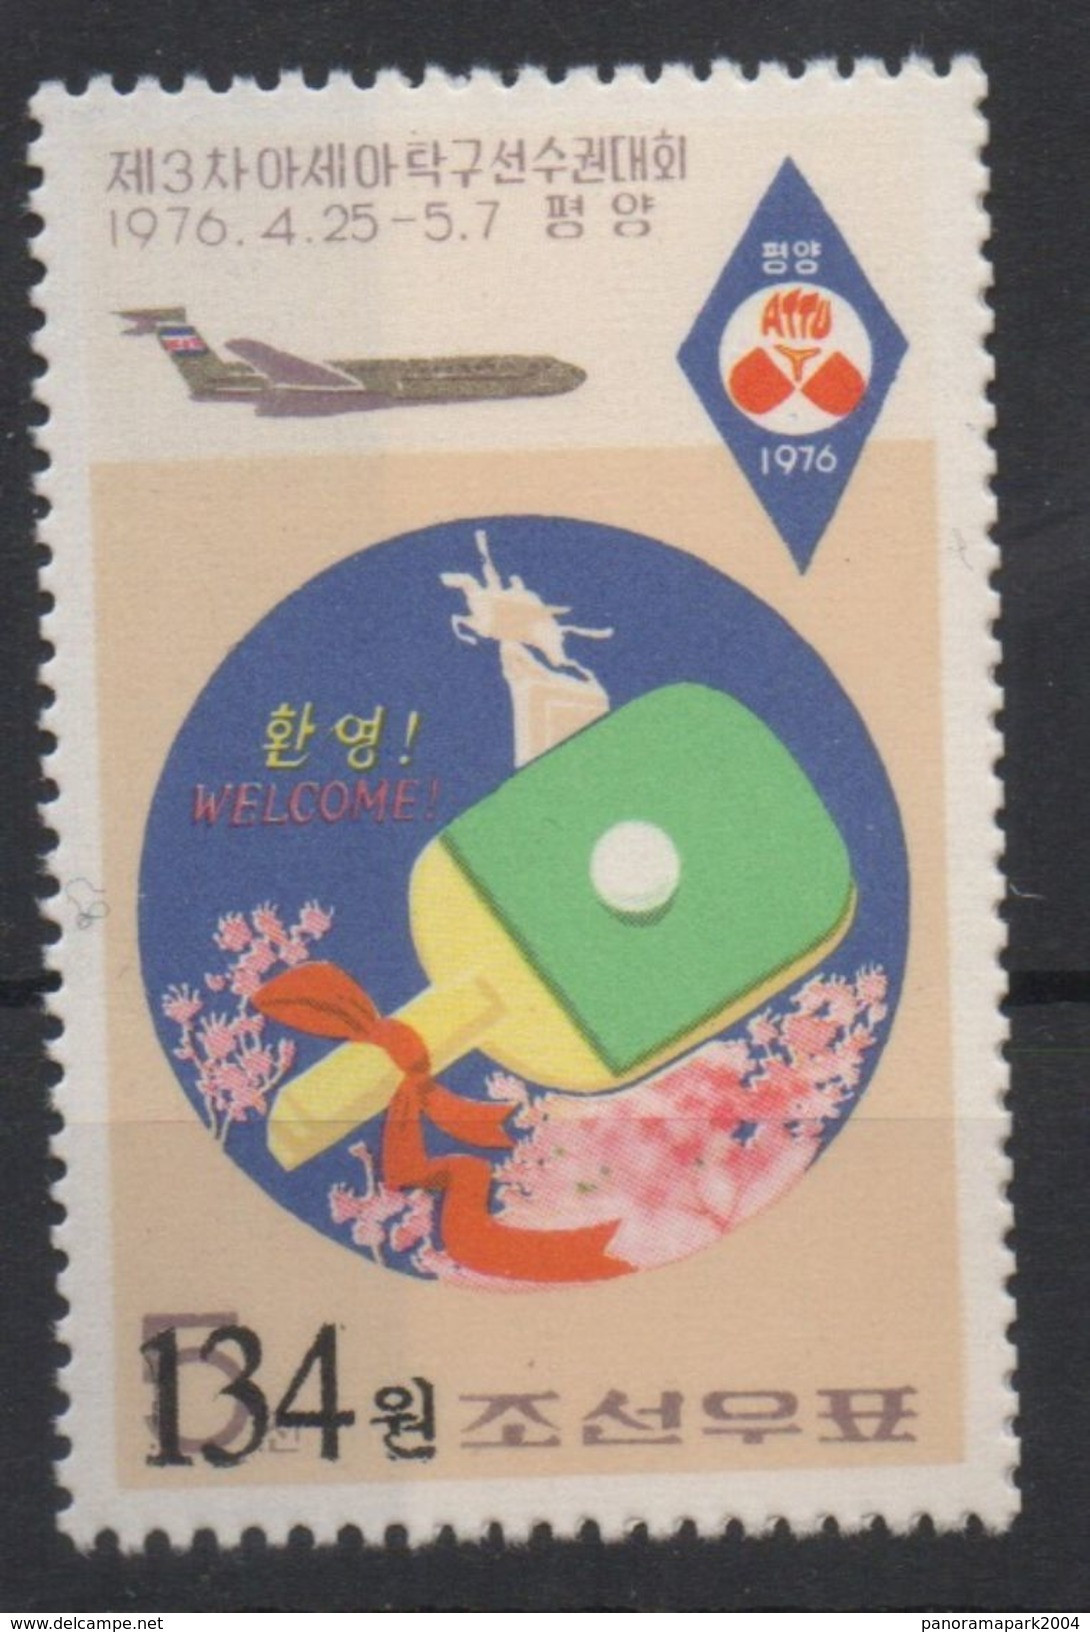 North Korea Coré Du Nord 2006 Mi. 5108 Surchargé OVERPRINT Tennis De Table Tischtennis Avion Airplane Flugzeug MNH** RAR - Aviones